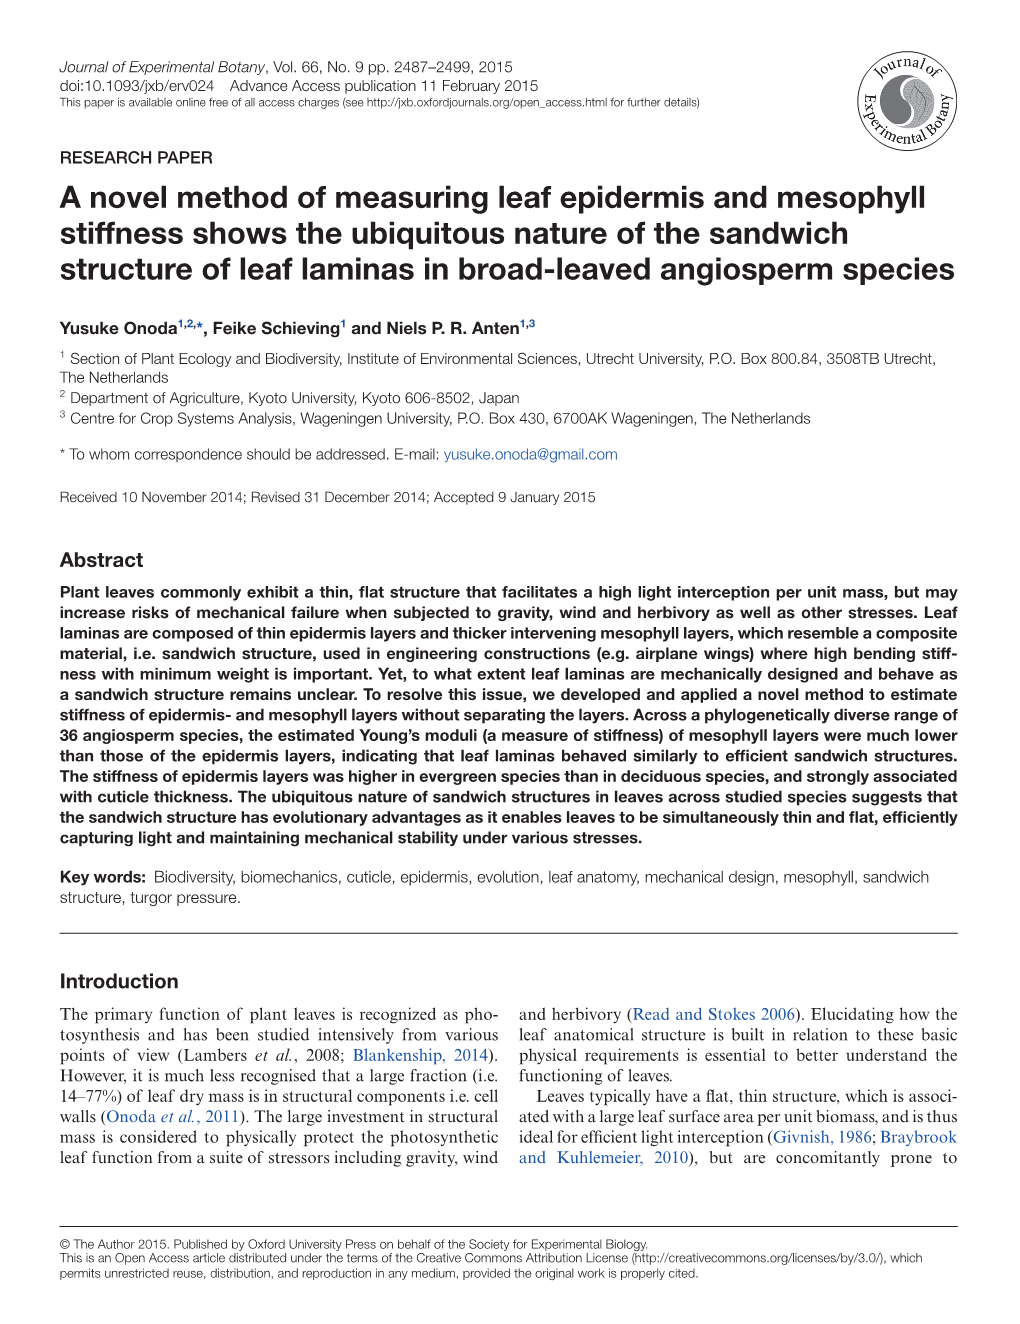 A Novel Method of Measuring Leaf Epidermis and Mesophyll Stiffness